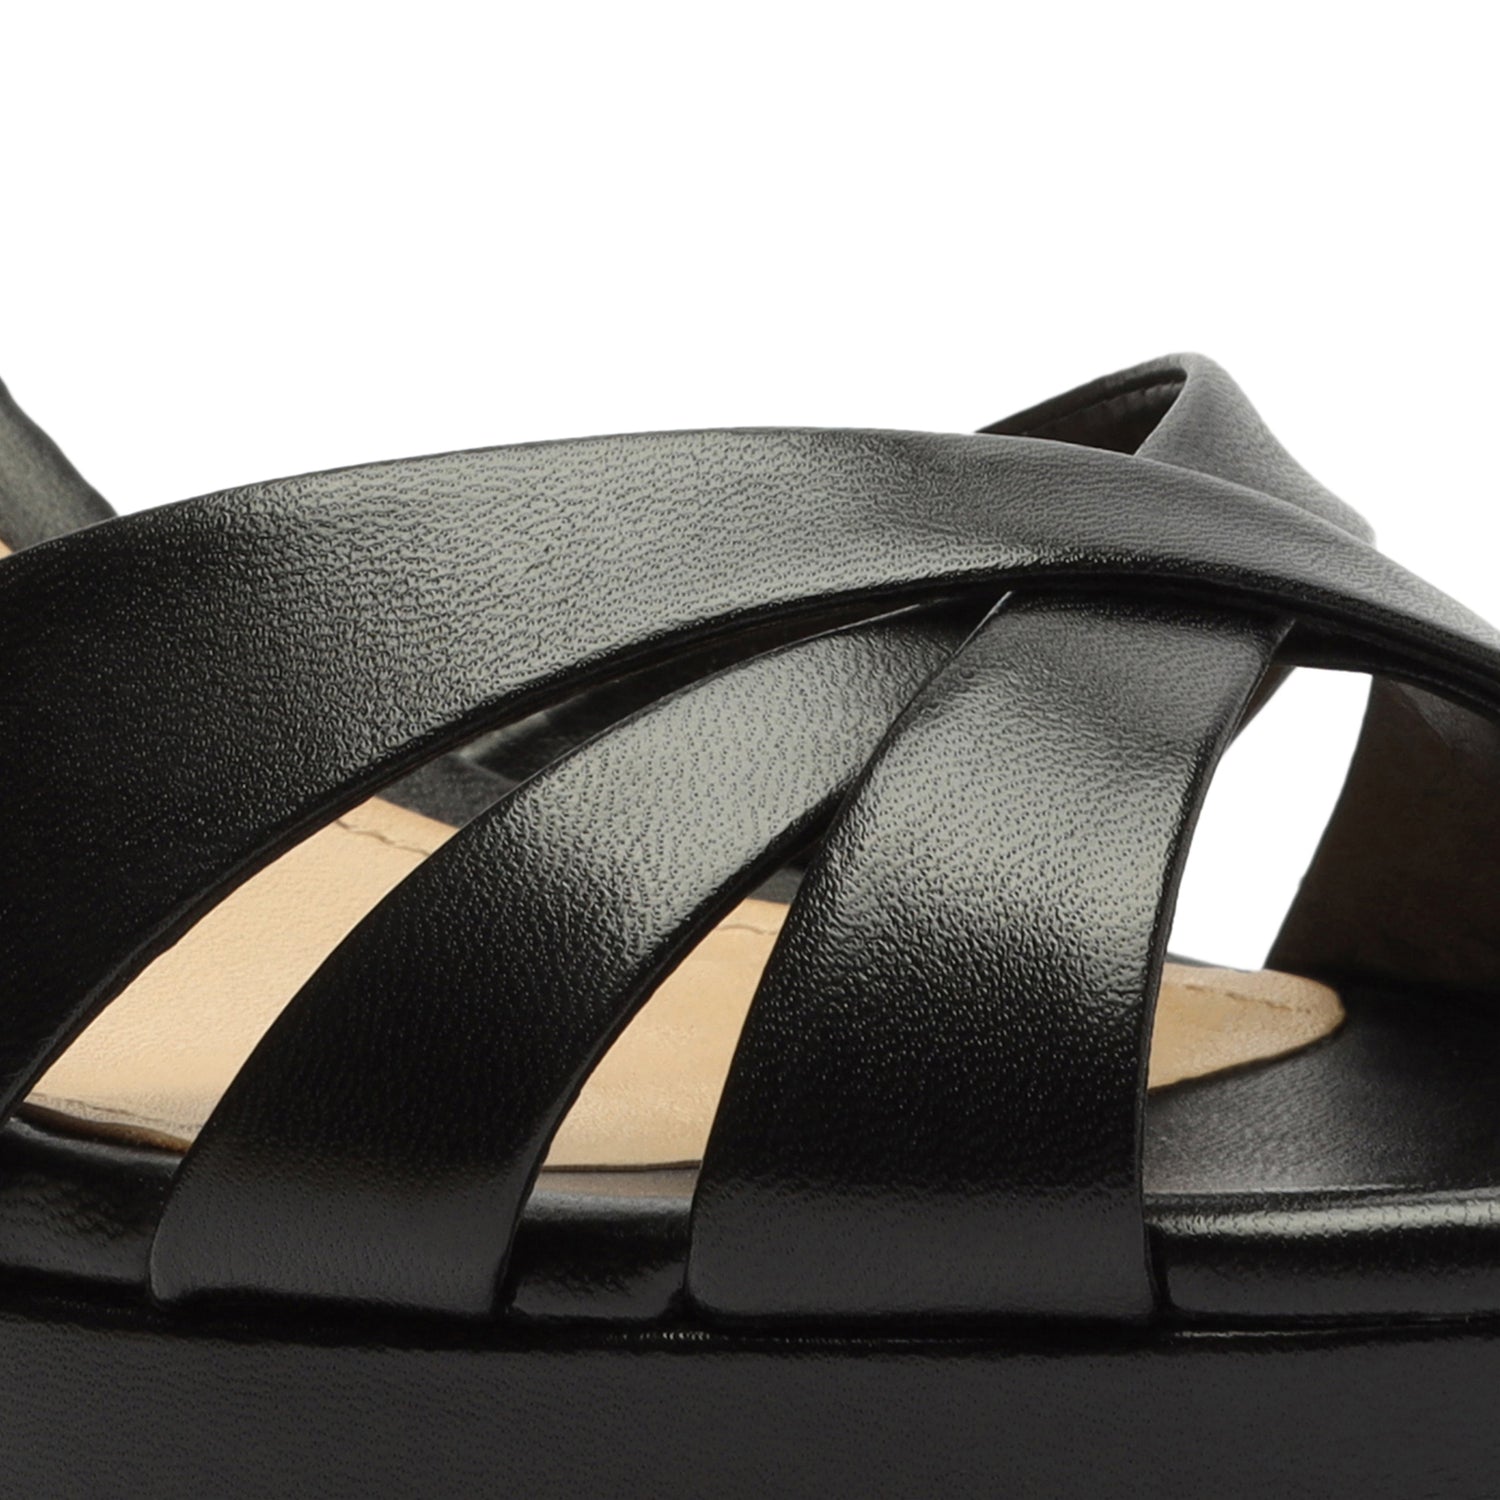 Keefa Nappa Leather Sandal Sandals OPEN STOCK    - Schutz Shoes